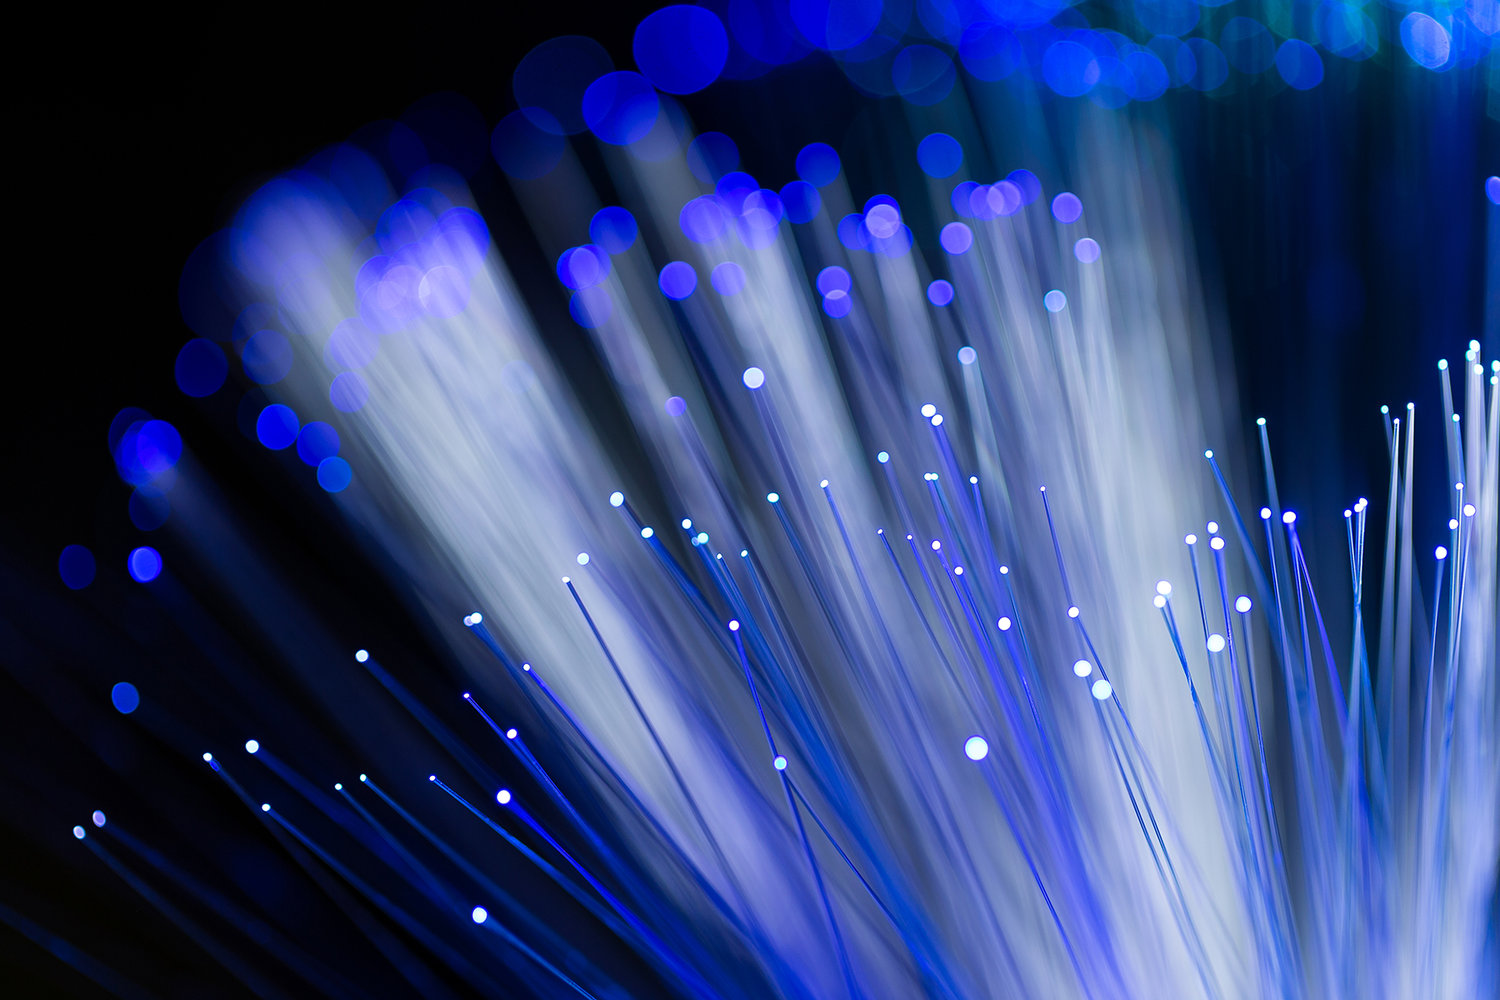 Internet technology fiber optic background